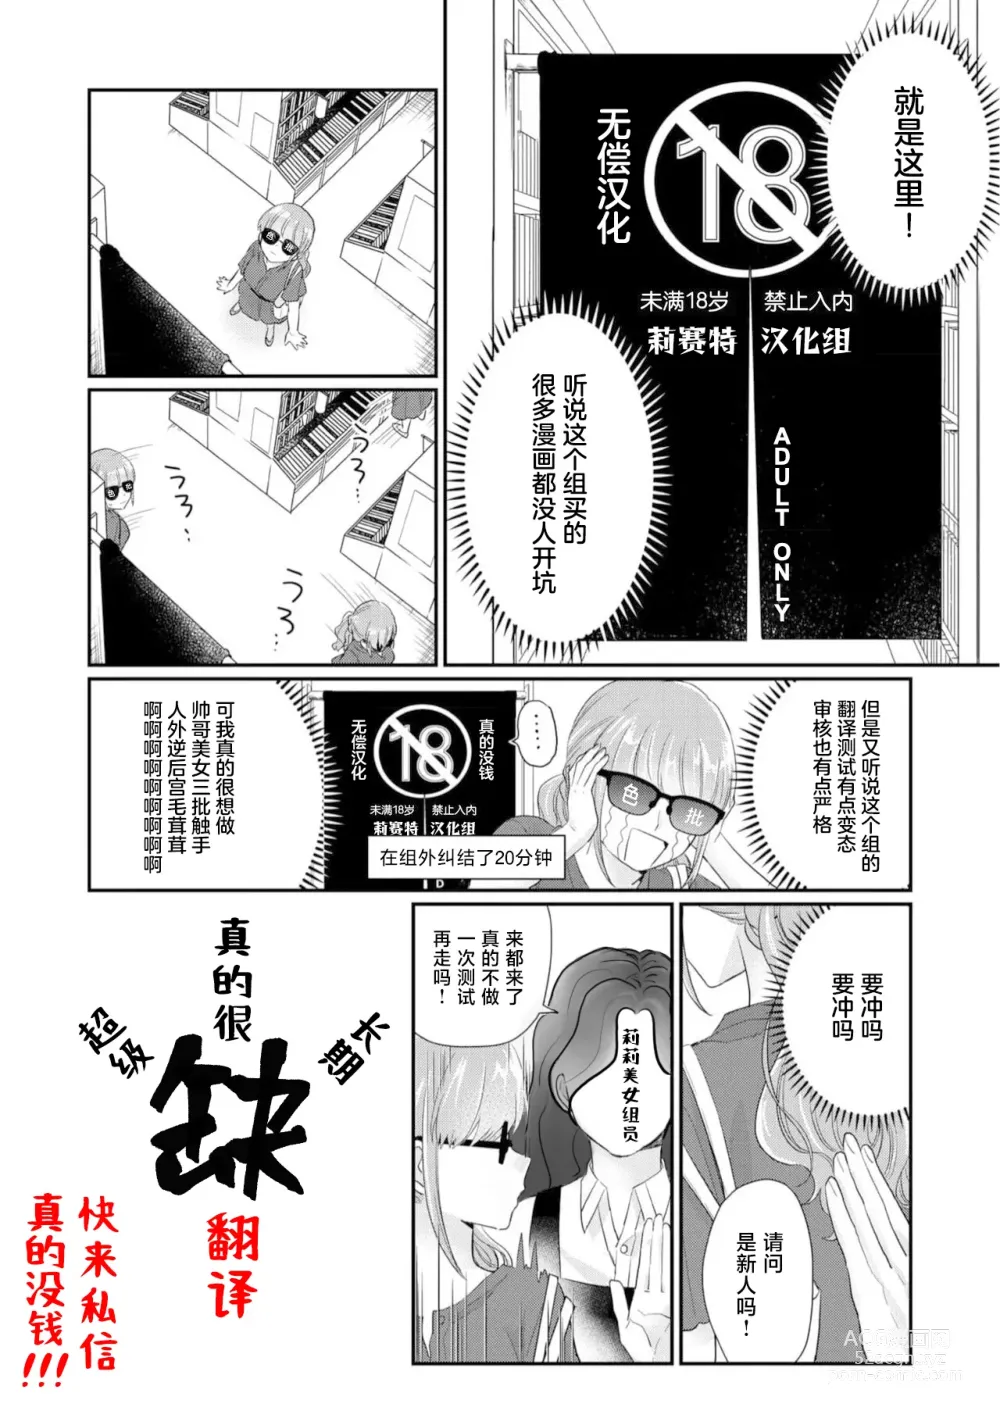 Page 88 of doujinshi 化身魅魔来取精～爱与背叛的情仇恋焰～